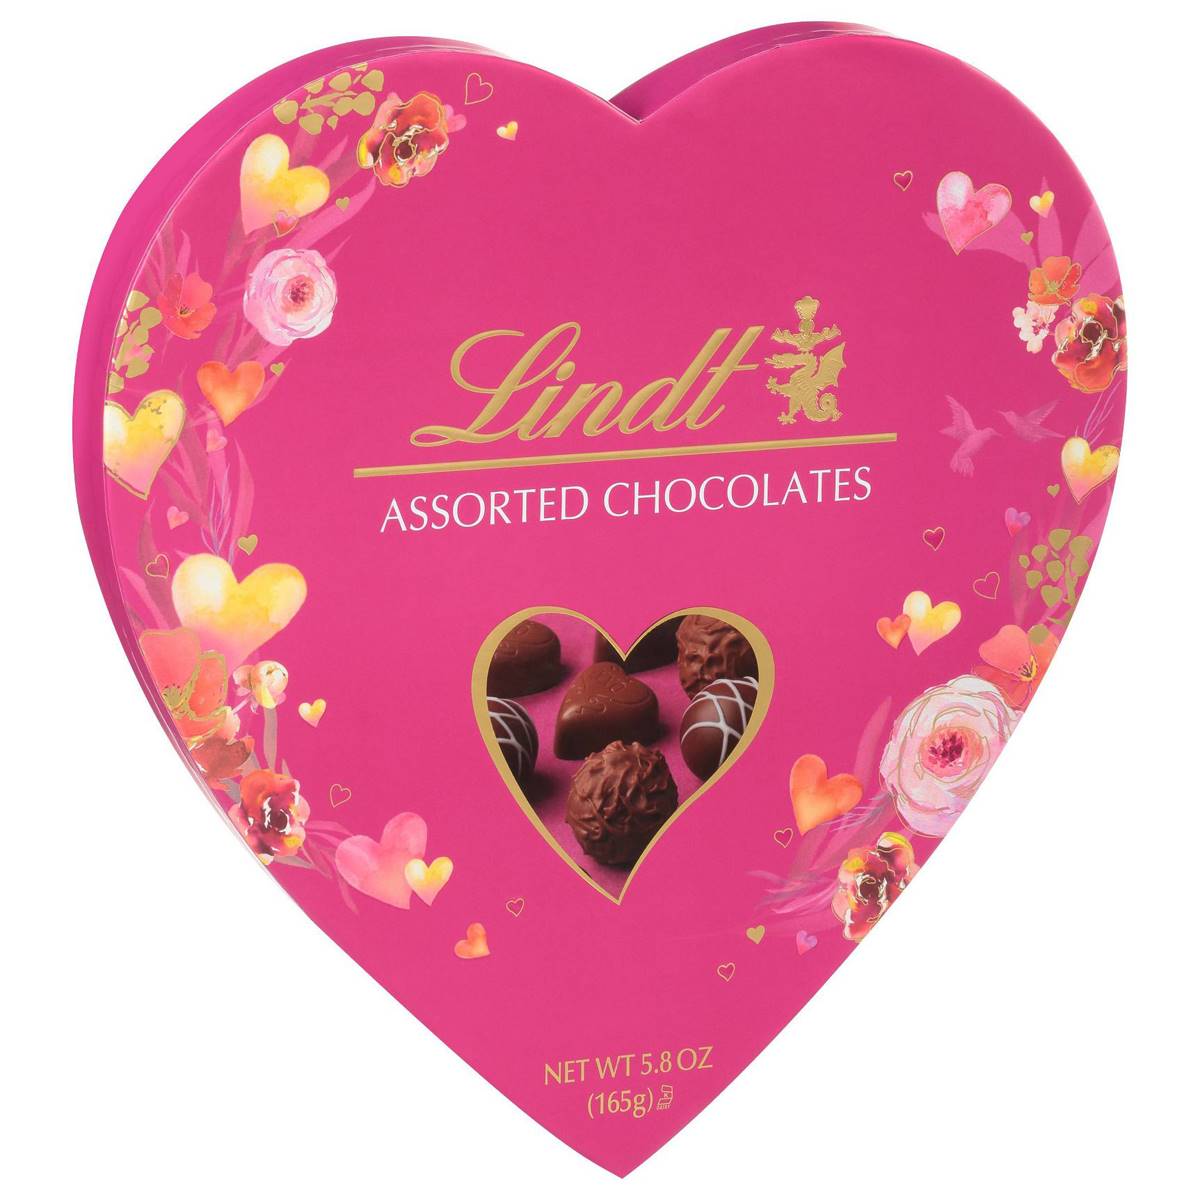 Lindt 5.8oz. Assorted Chocolates Valentine Heart